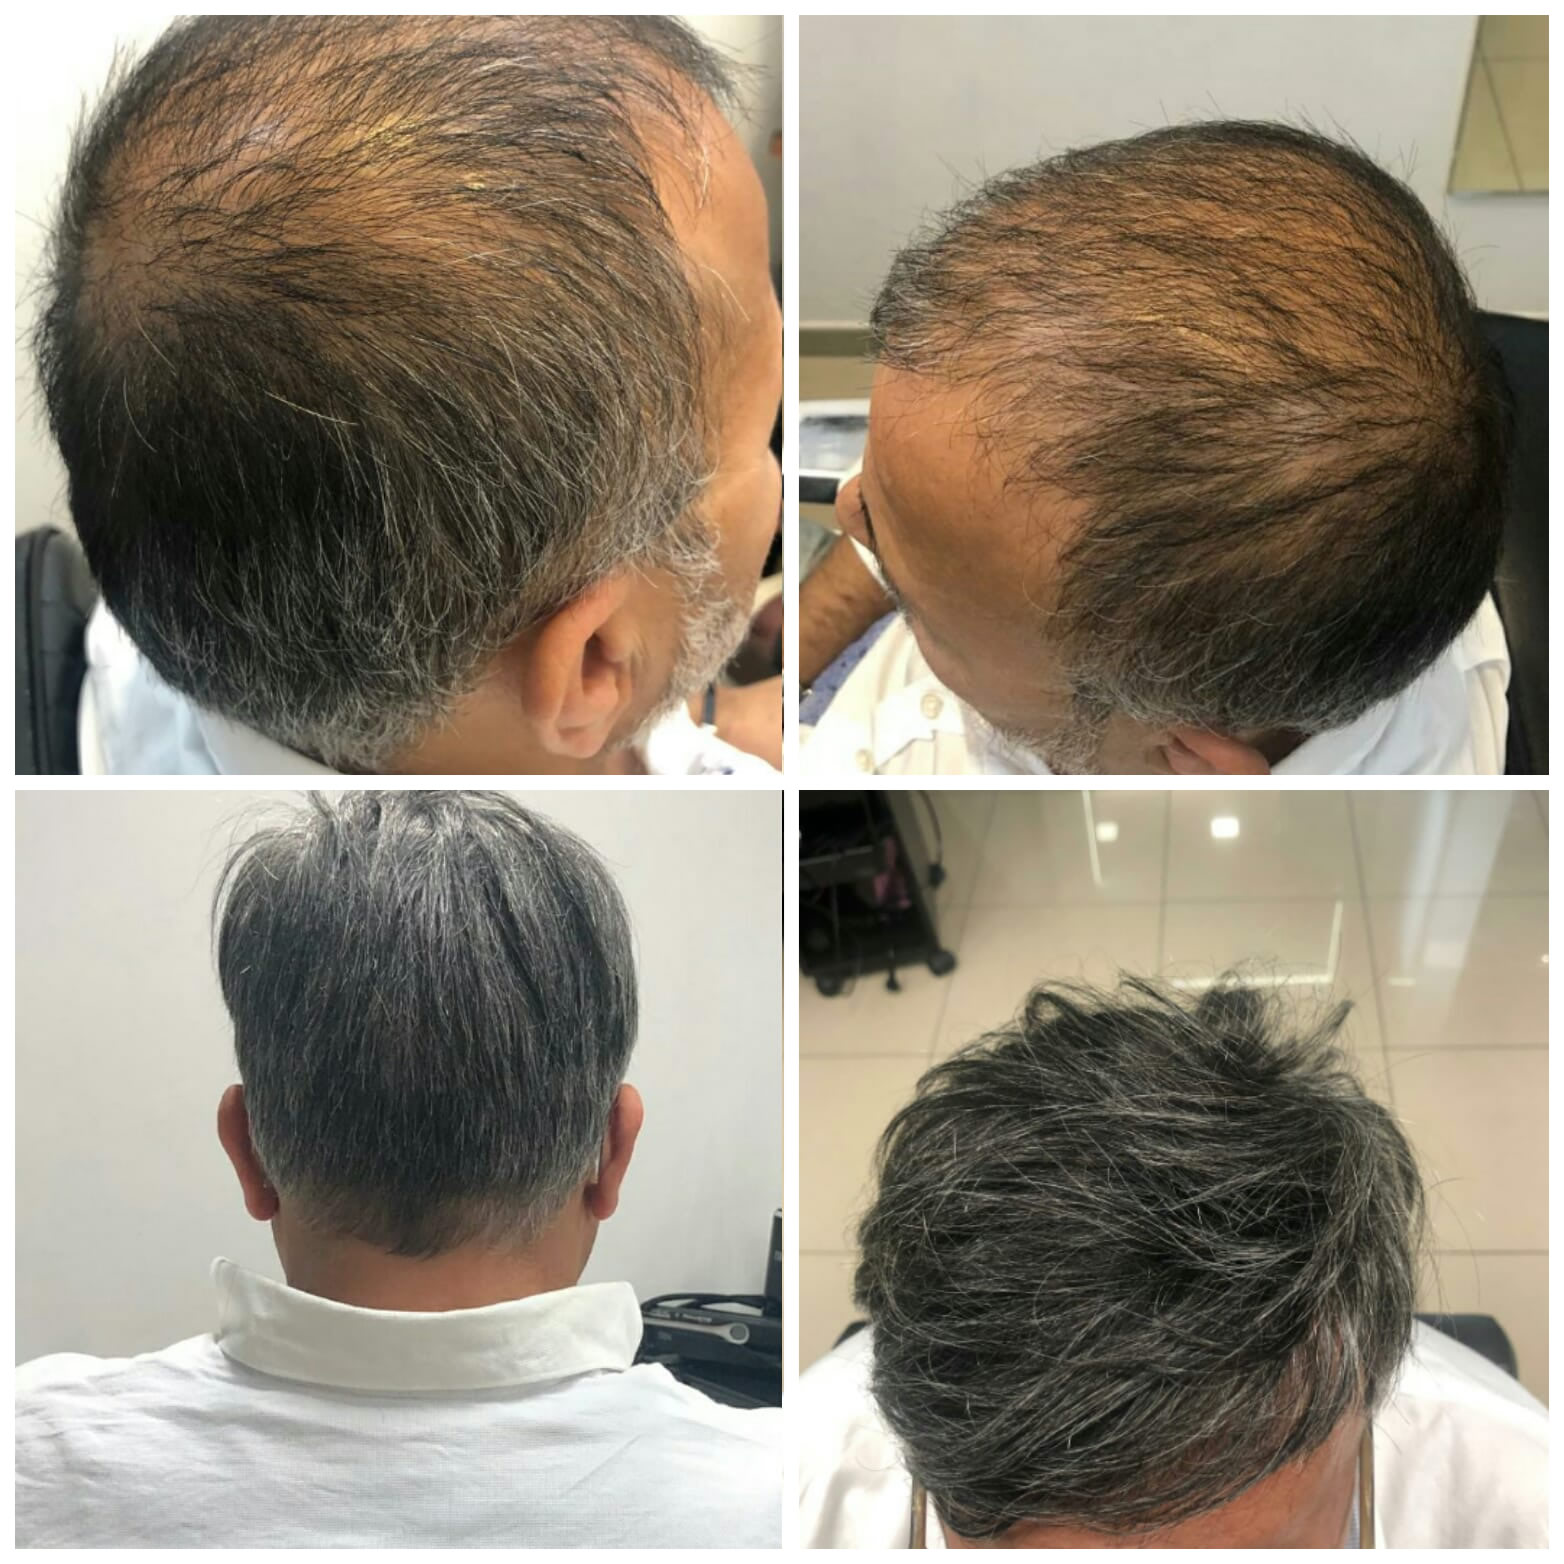 extension per alopecia